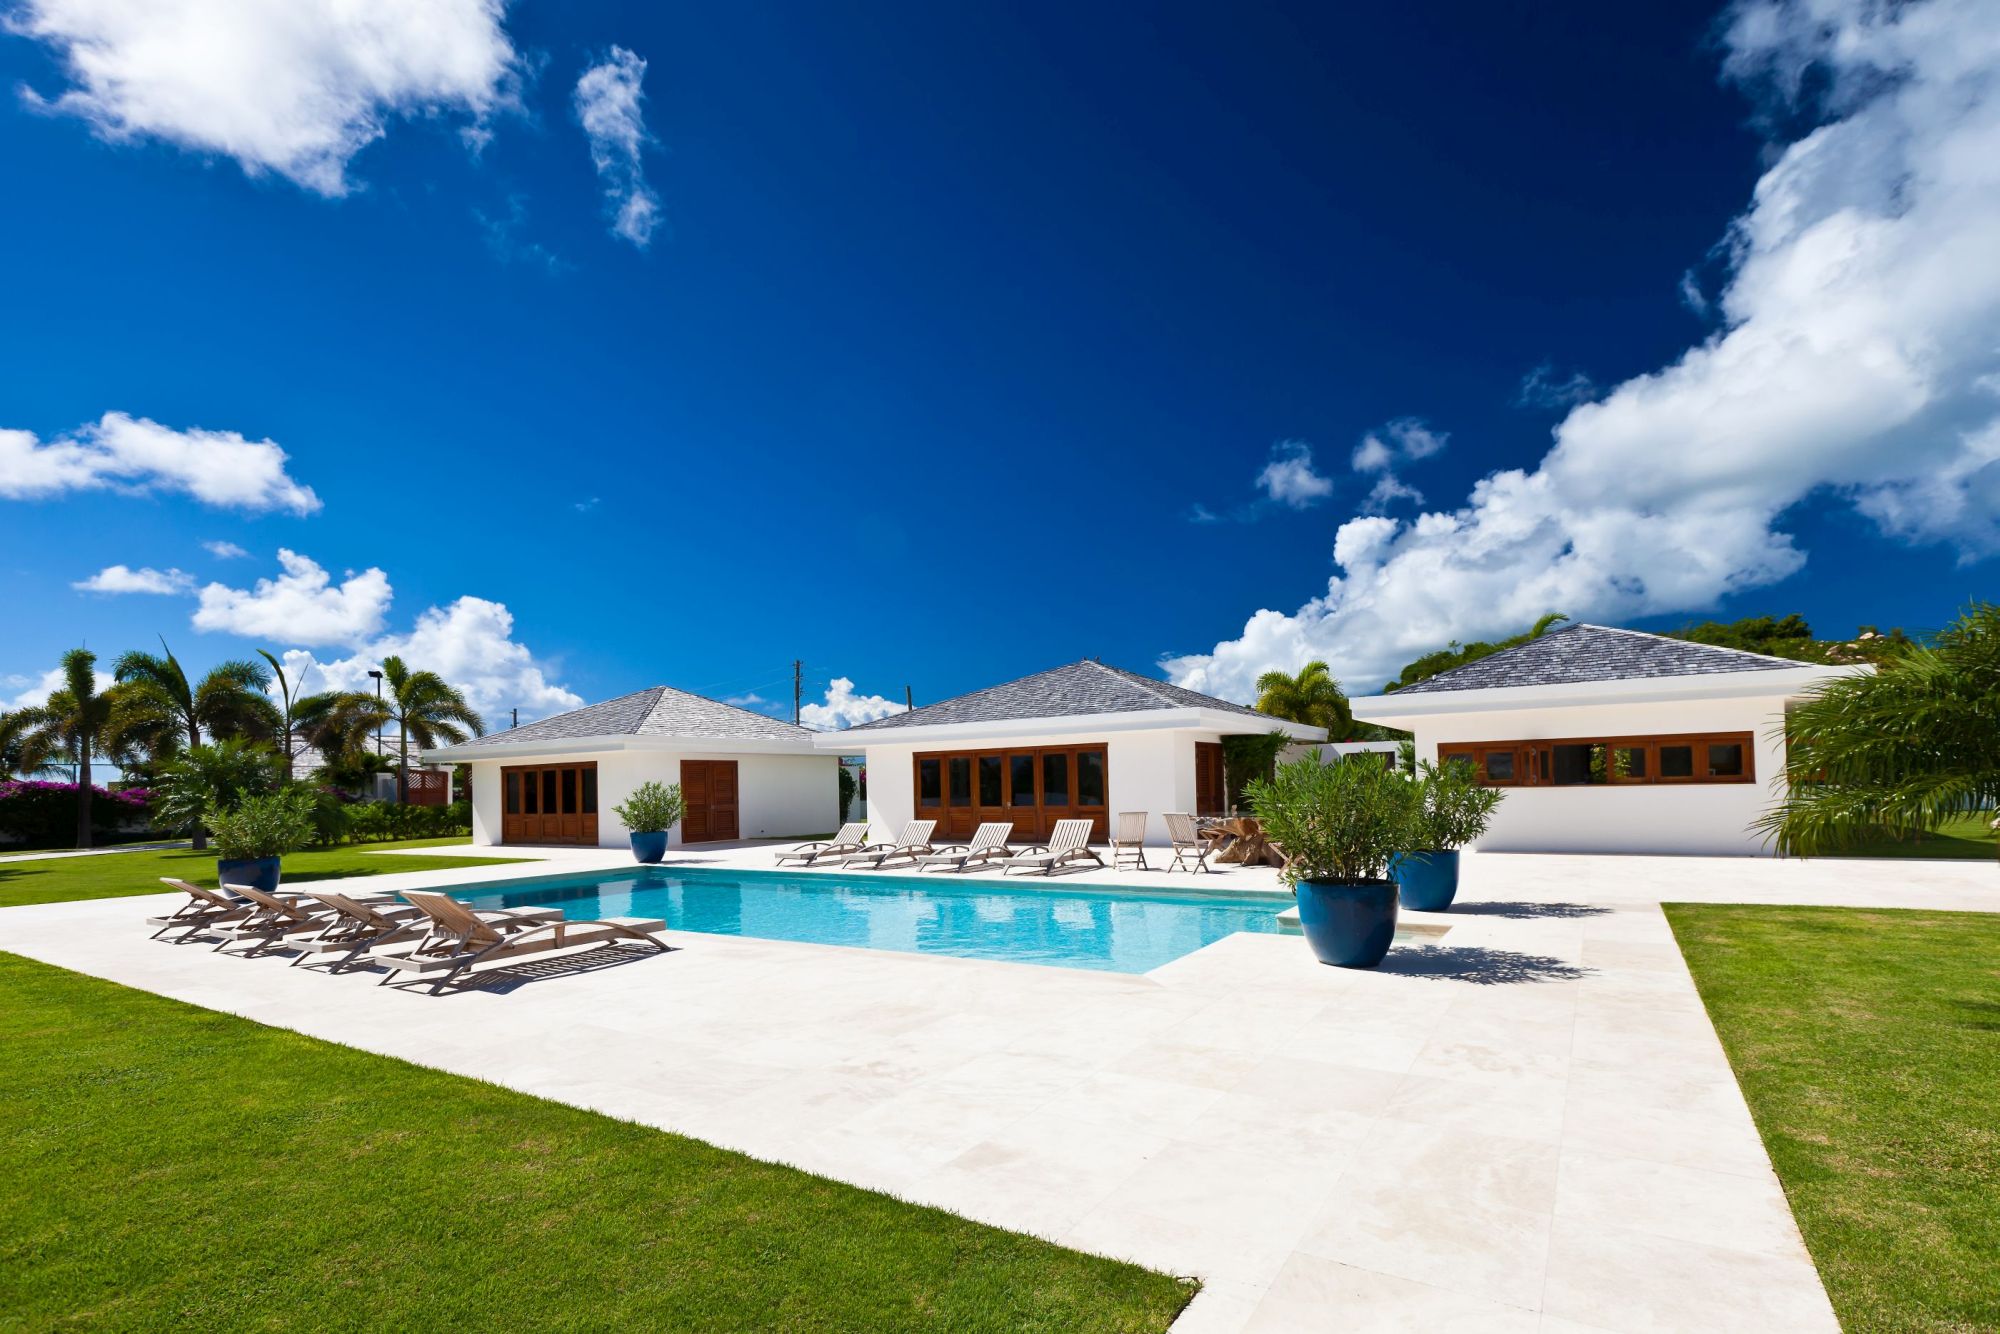 gardens and pool of le bleu, anguilla